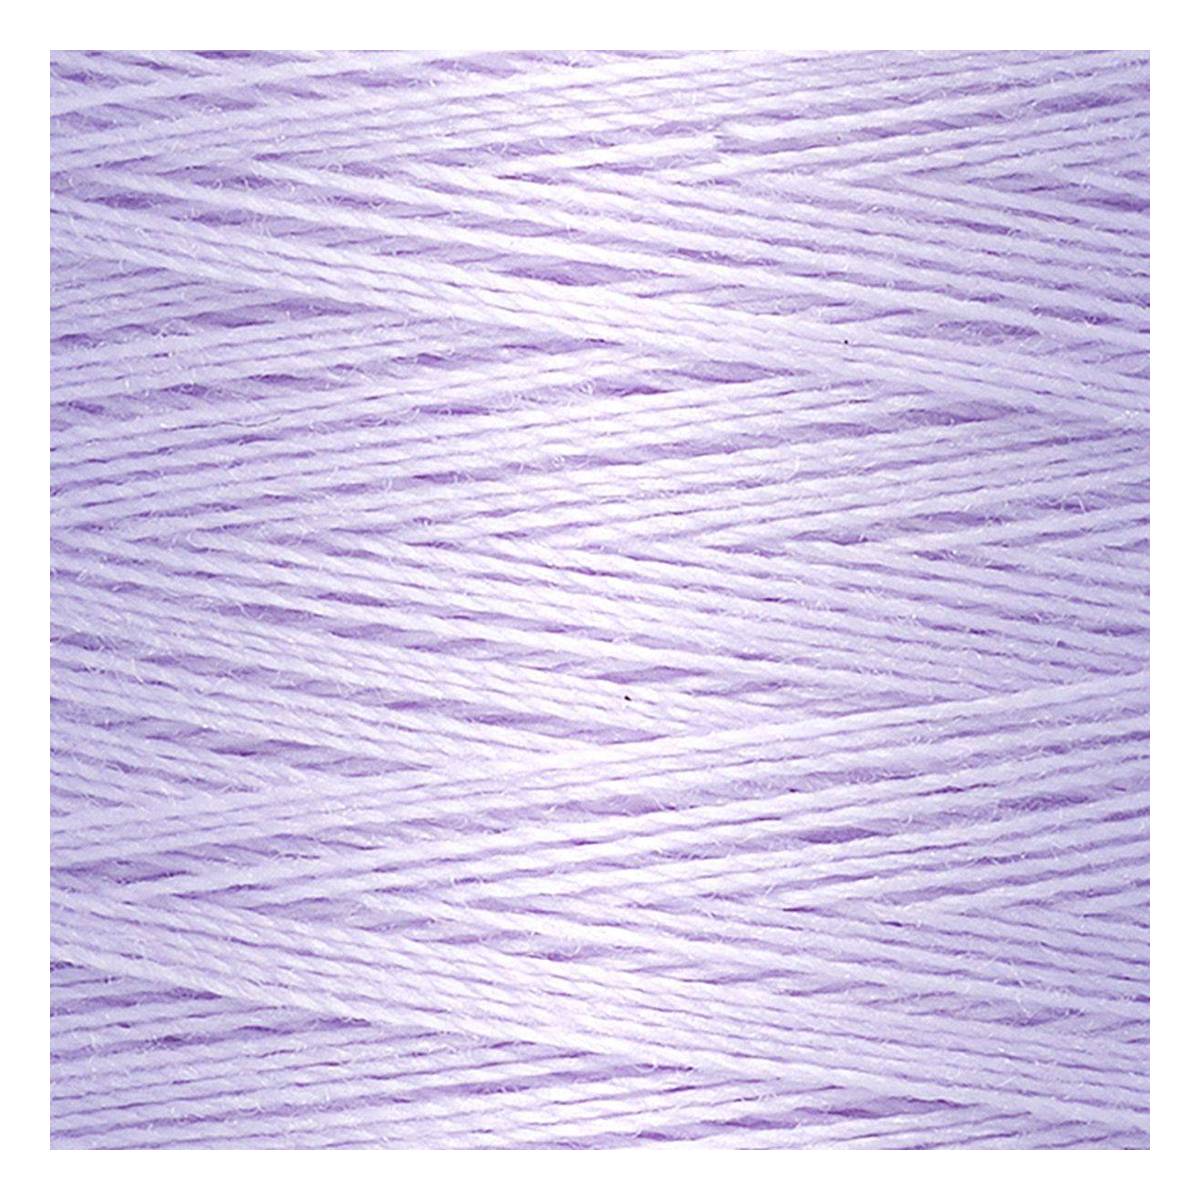 Gutermann Purple Sew All Thread 250m (442)